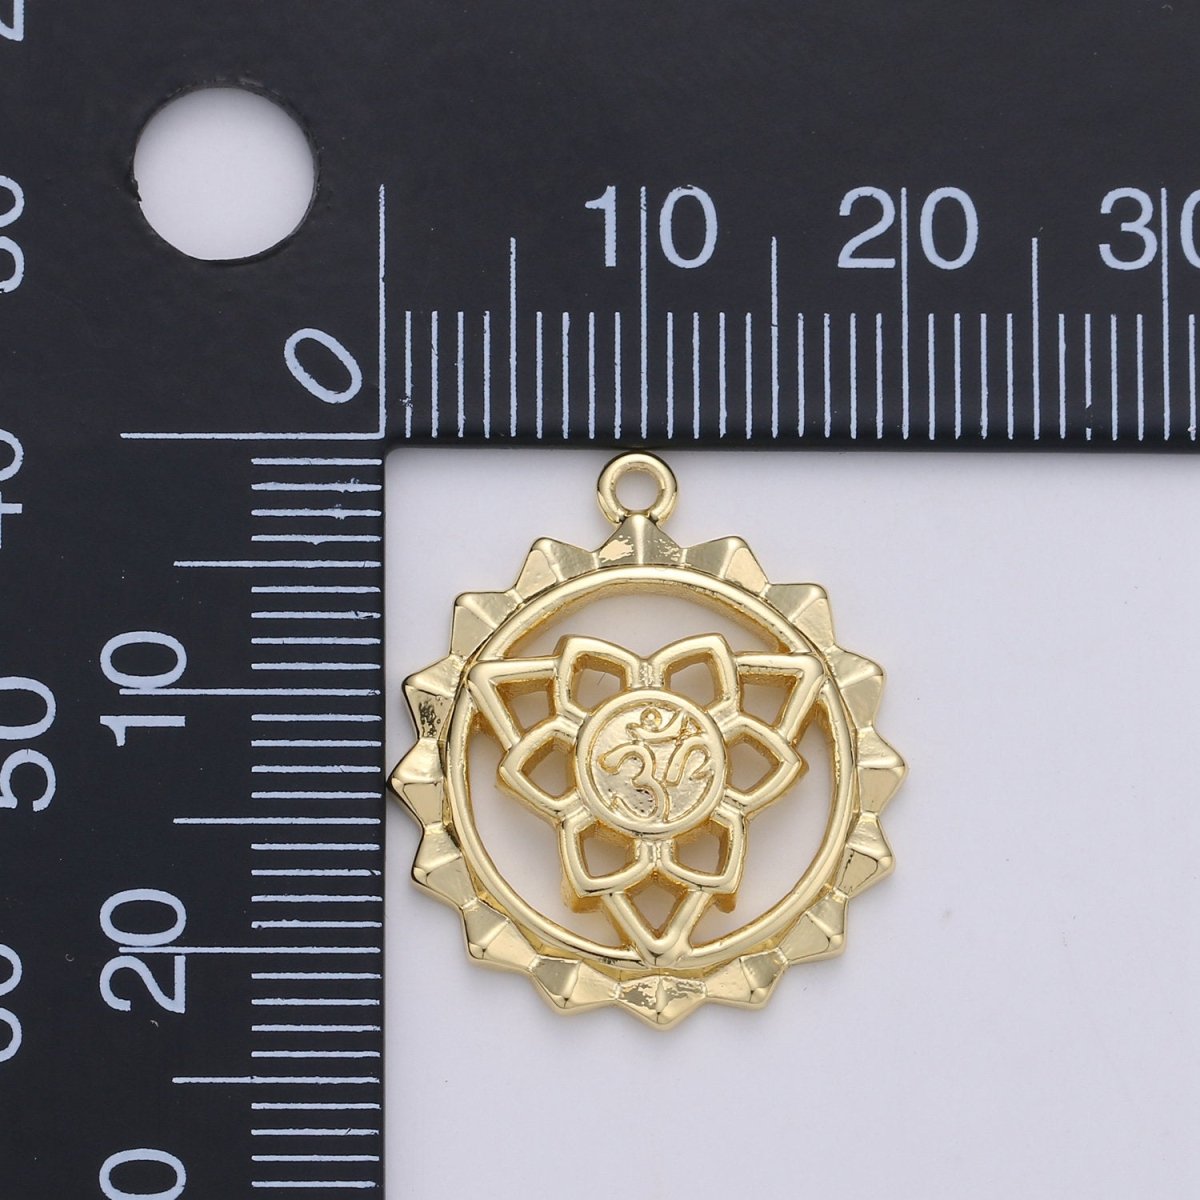 24K Gold Filled Lotus Flower Ohm Dainty Charm Religious Zen Peace Pendant for Necklace or Bracelet, C-876 - DLUXCA